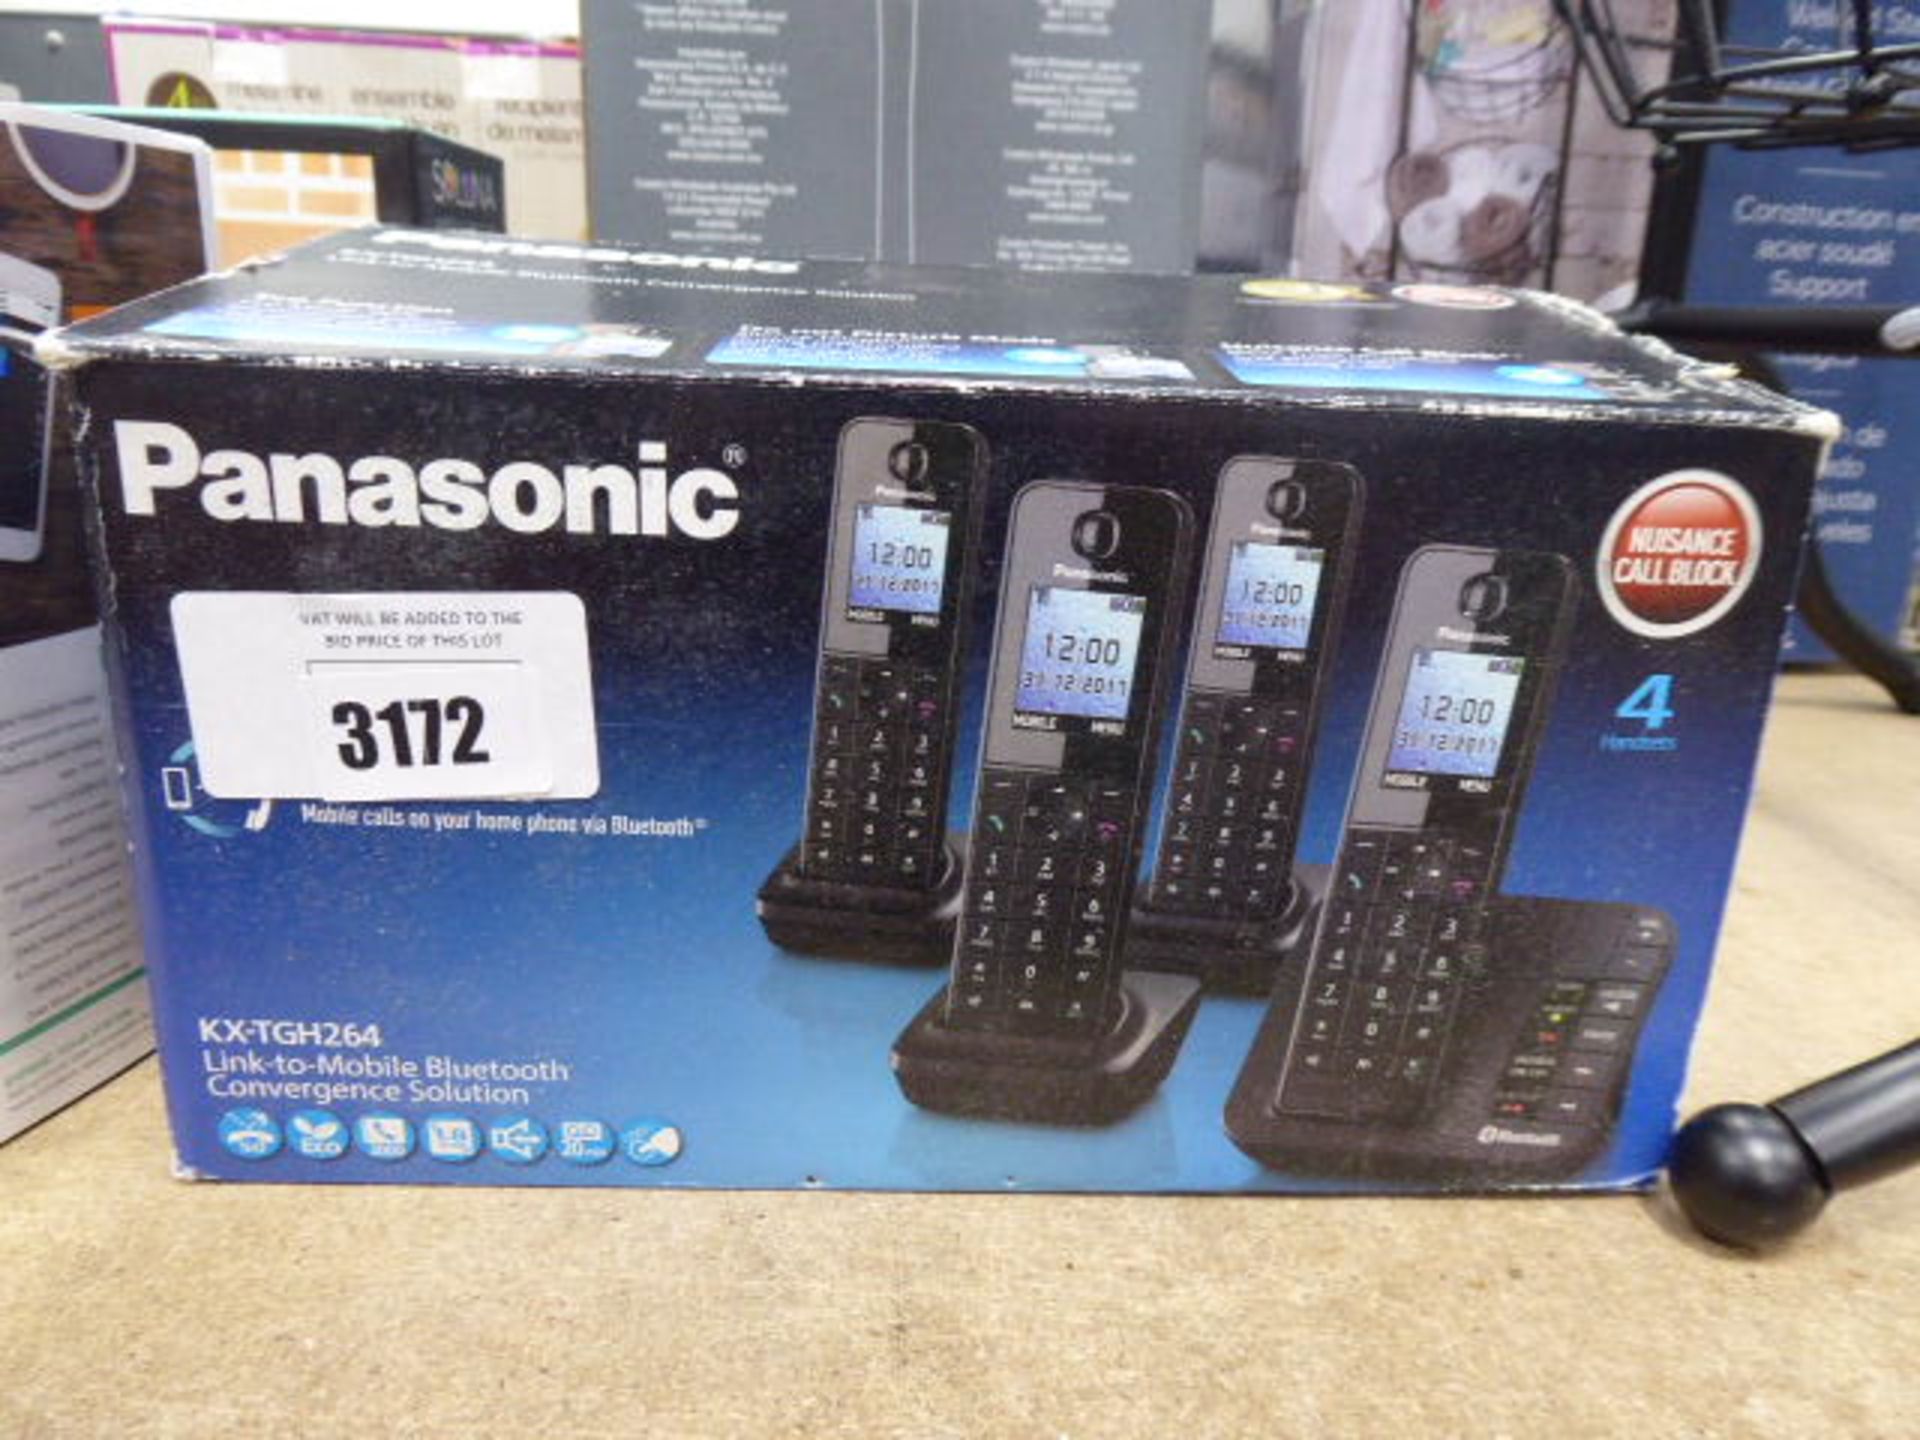 Panasonic KXTGH264 link to mobile bluetooth set